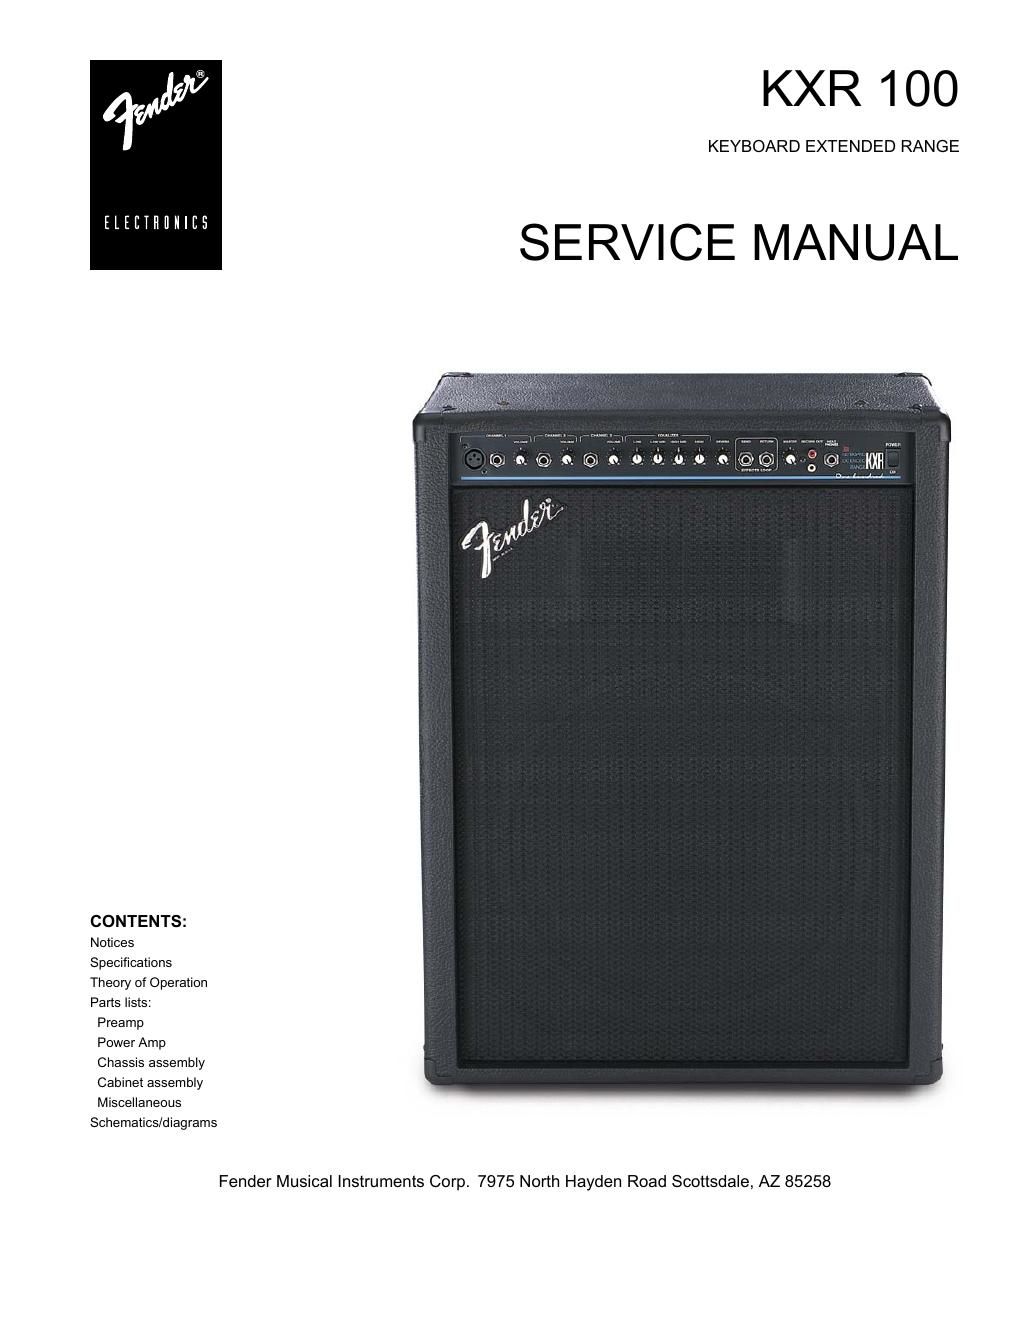 fender kxr 100 service manual